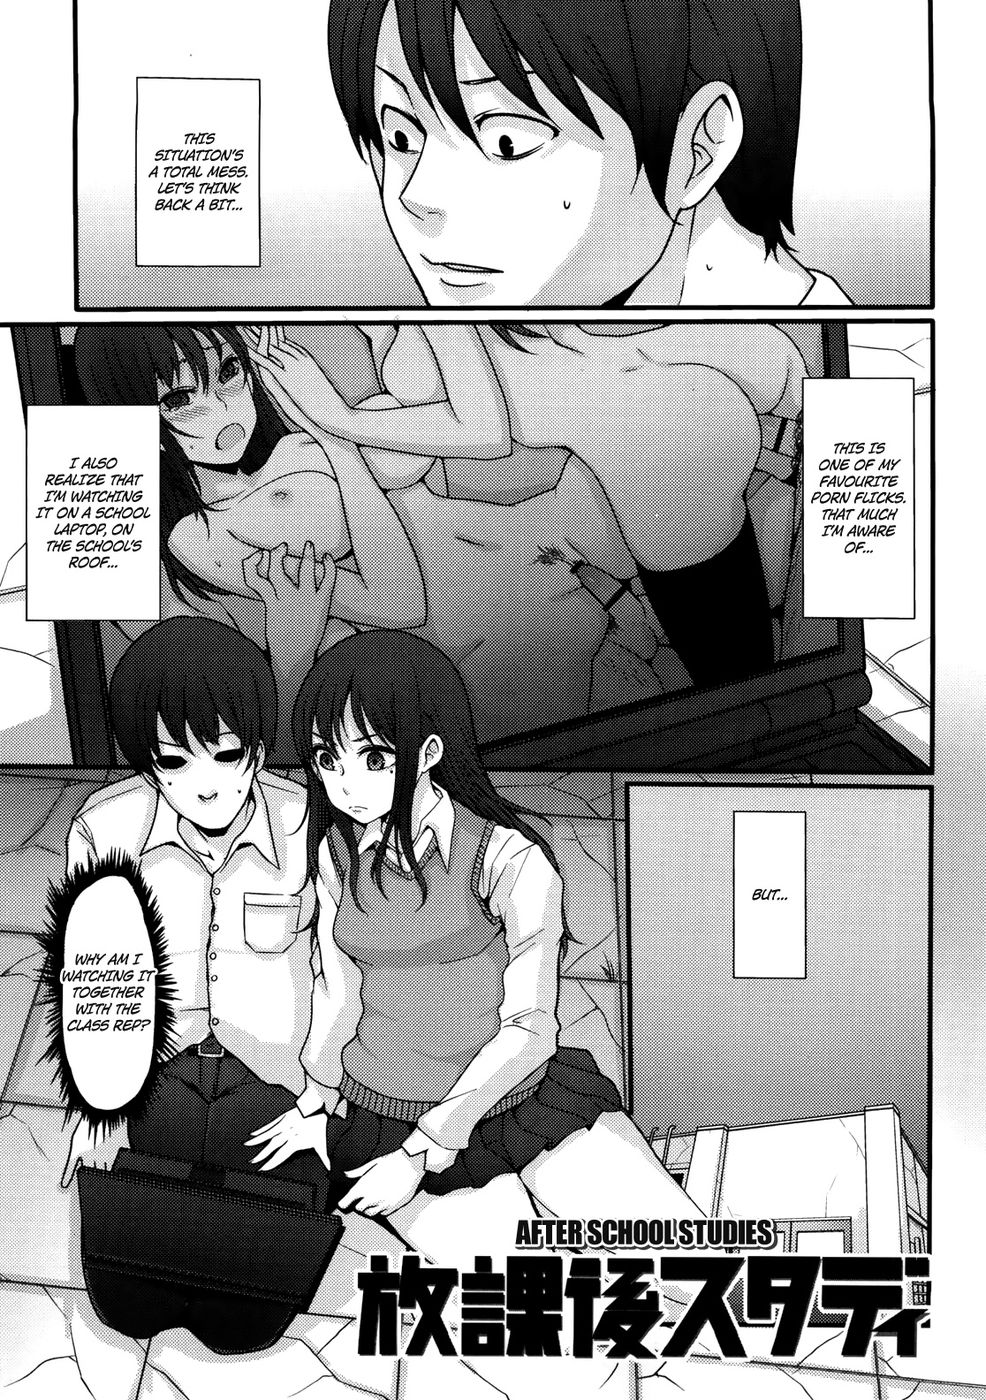 Hentai Manga Comic-After School Studies-Read-1